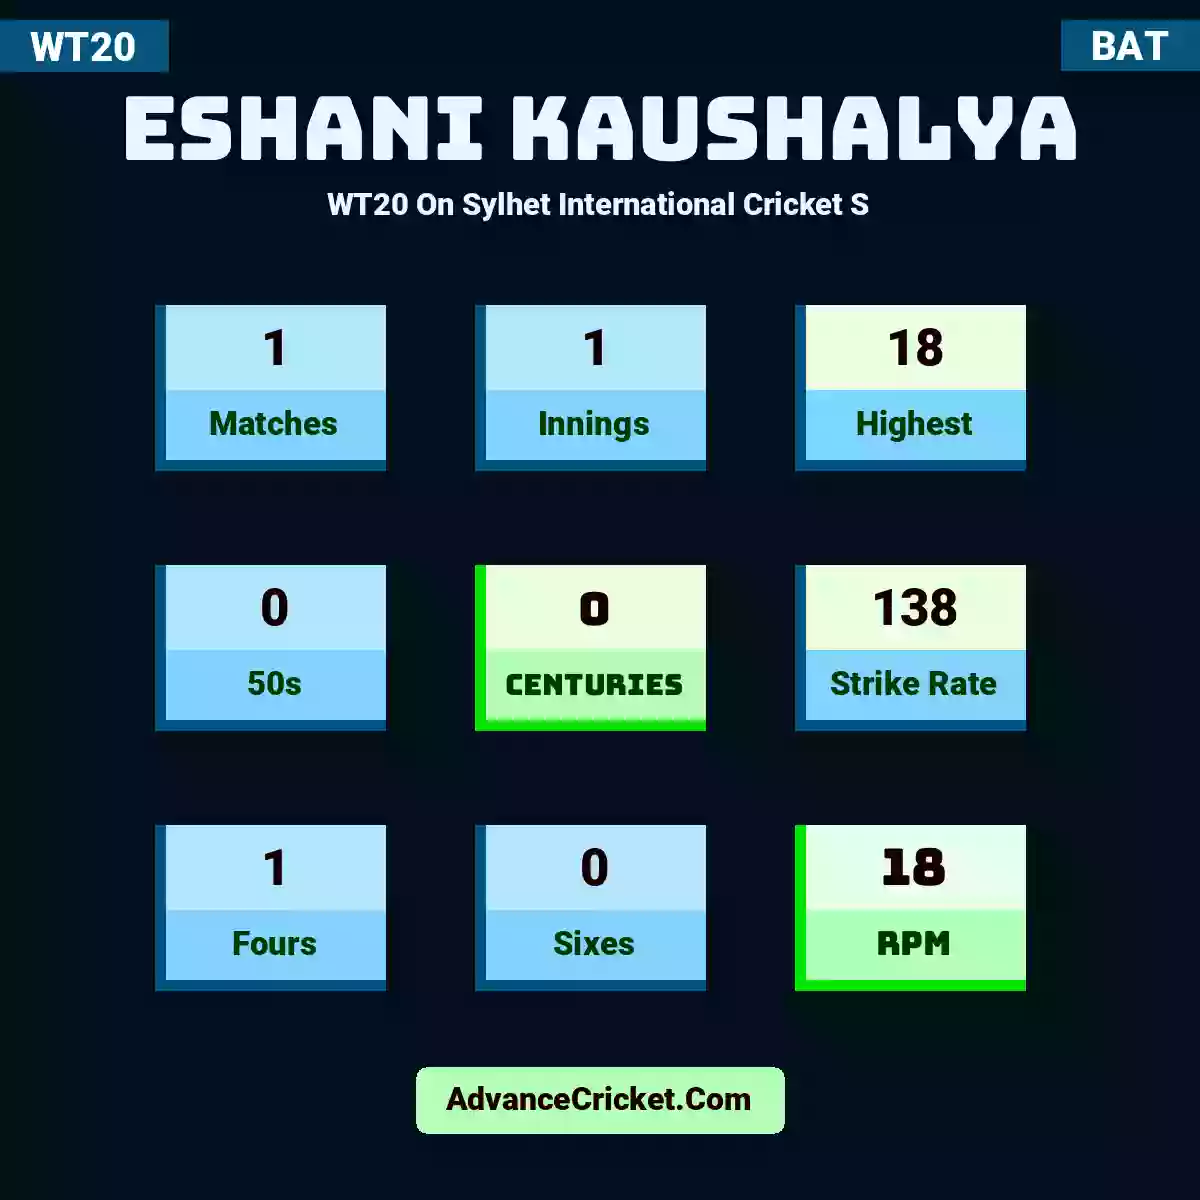 Eshani Kaushalya WT20  On Sylhet International Cricket S, Eshani Kaushalya played 1 matches, scored 18 runs as highest, 0 half-centuries, and 0 centuries, with a strike rate of 138. E.Kaushalya hit 1 fours and 0 sixes, with an RPM of 18.